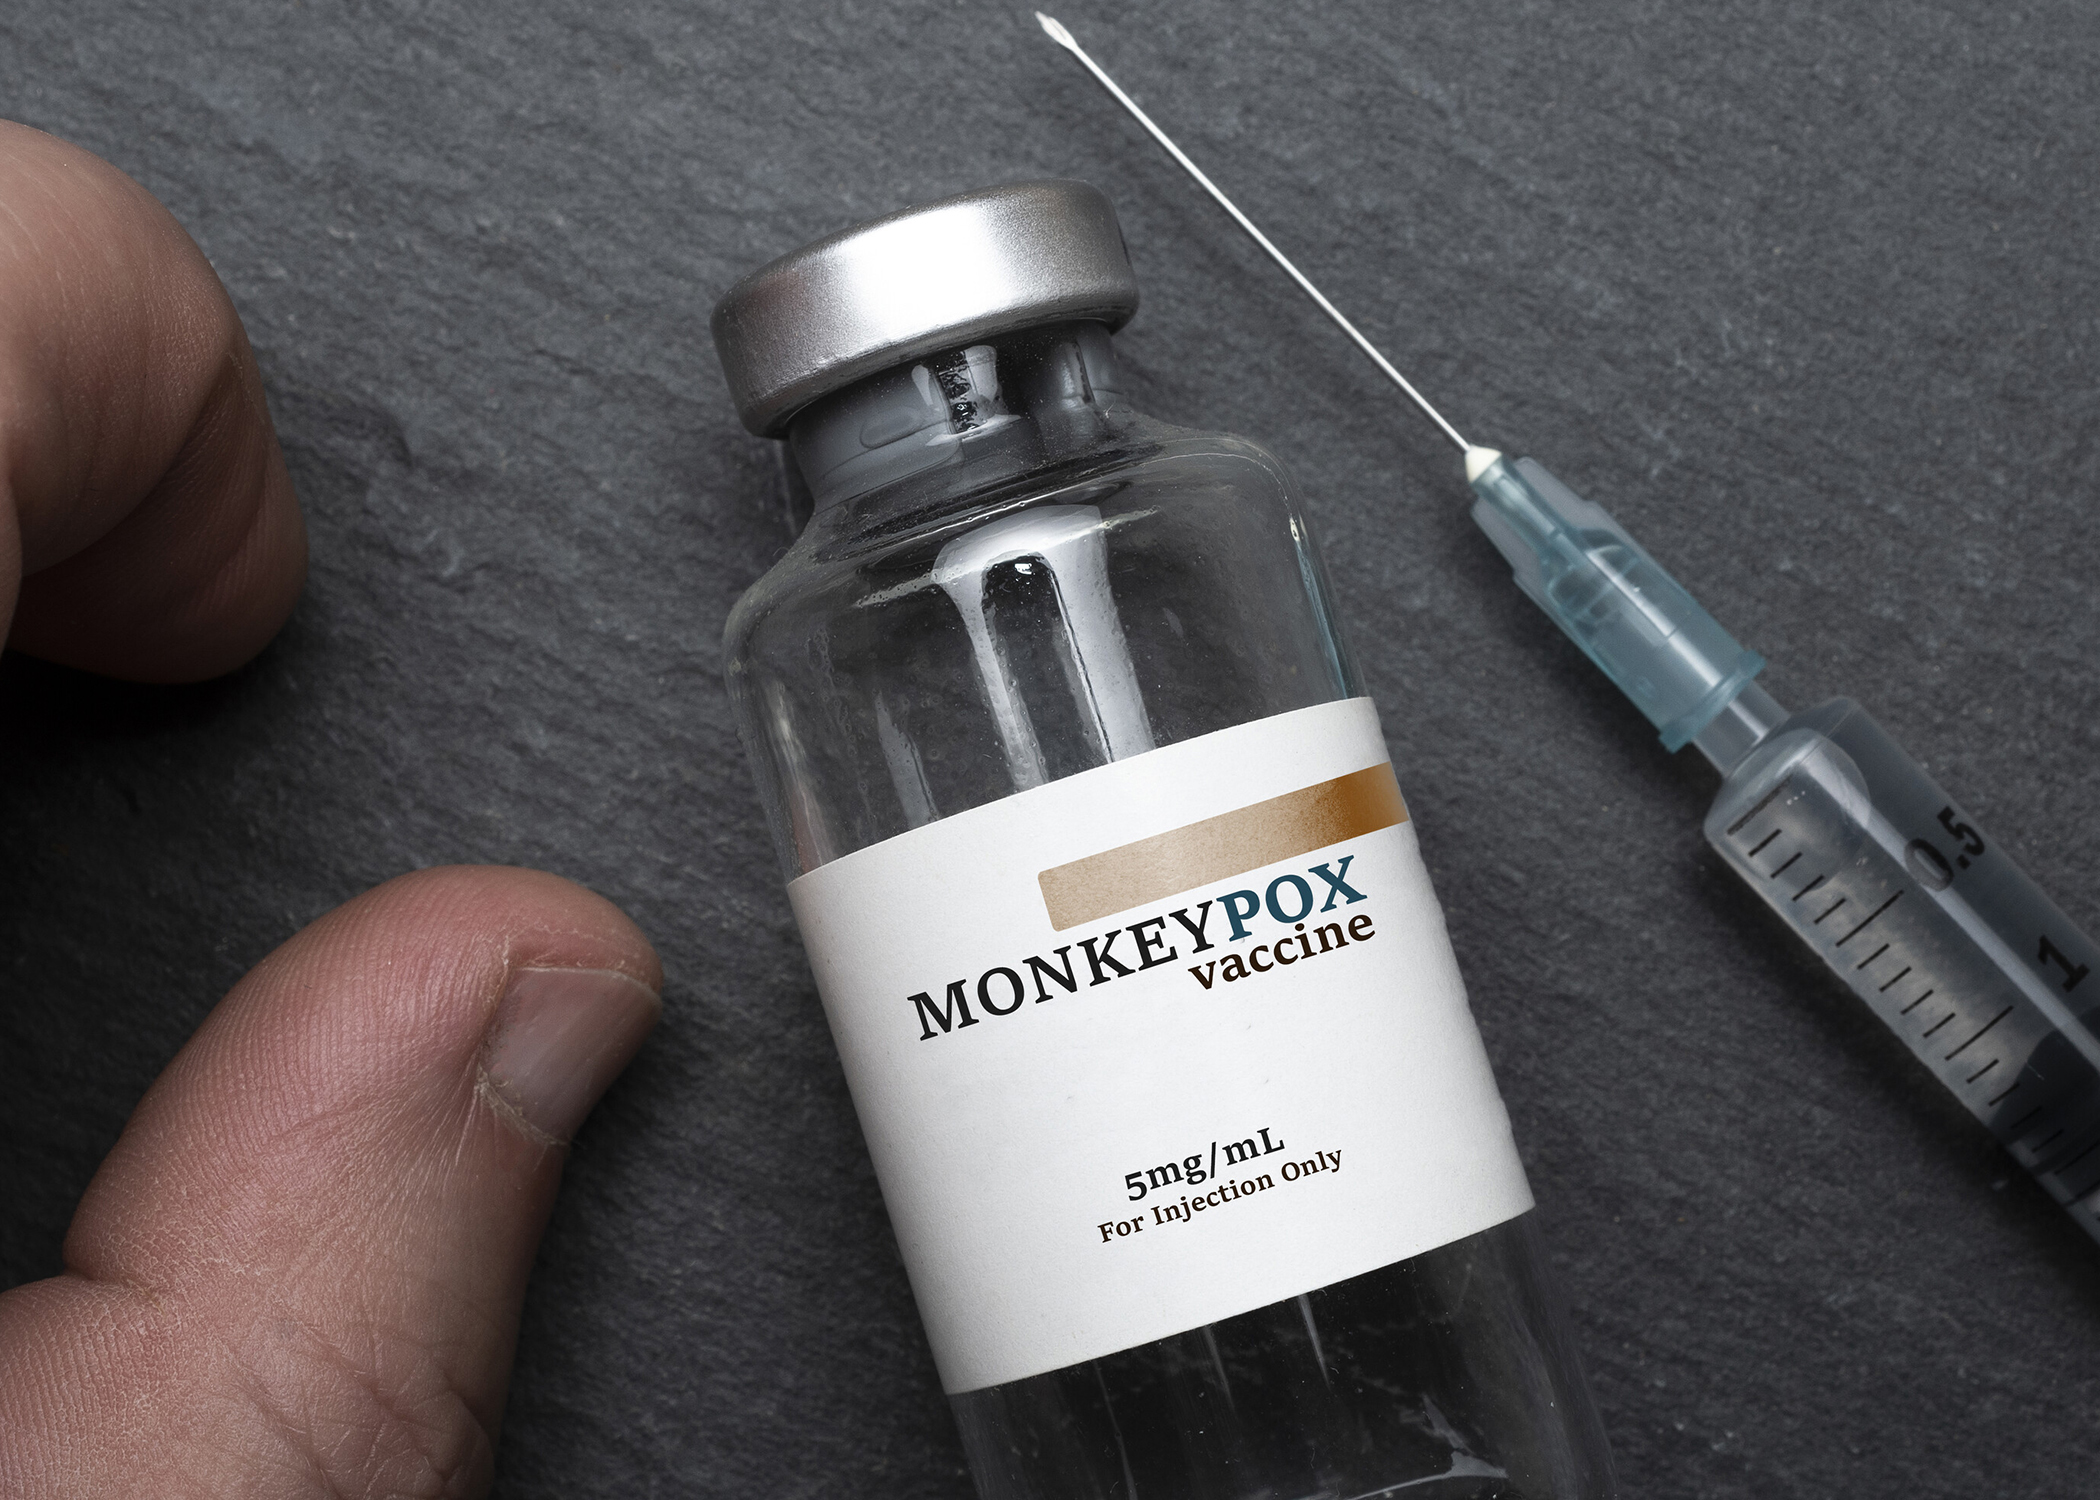 Monkeypox - Benton Franklin Health District